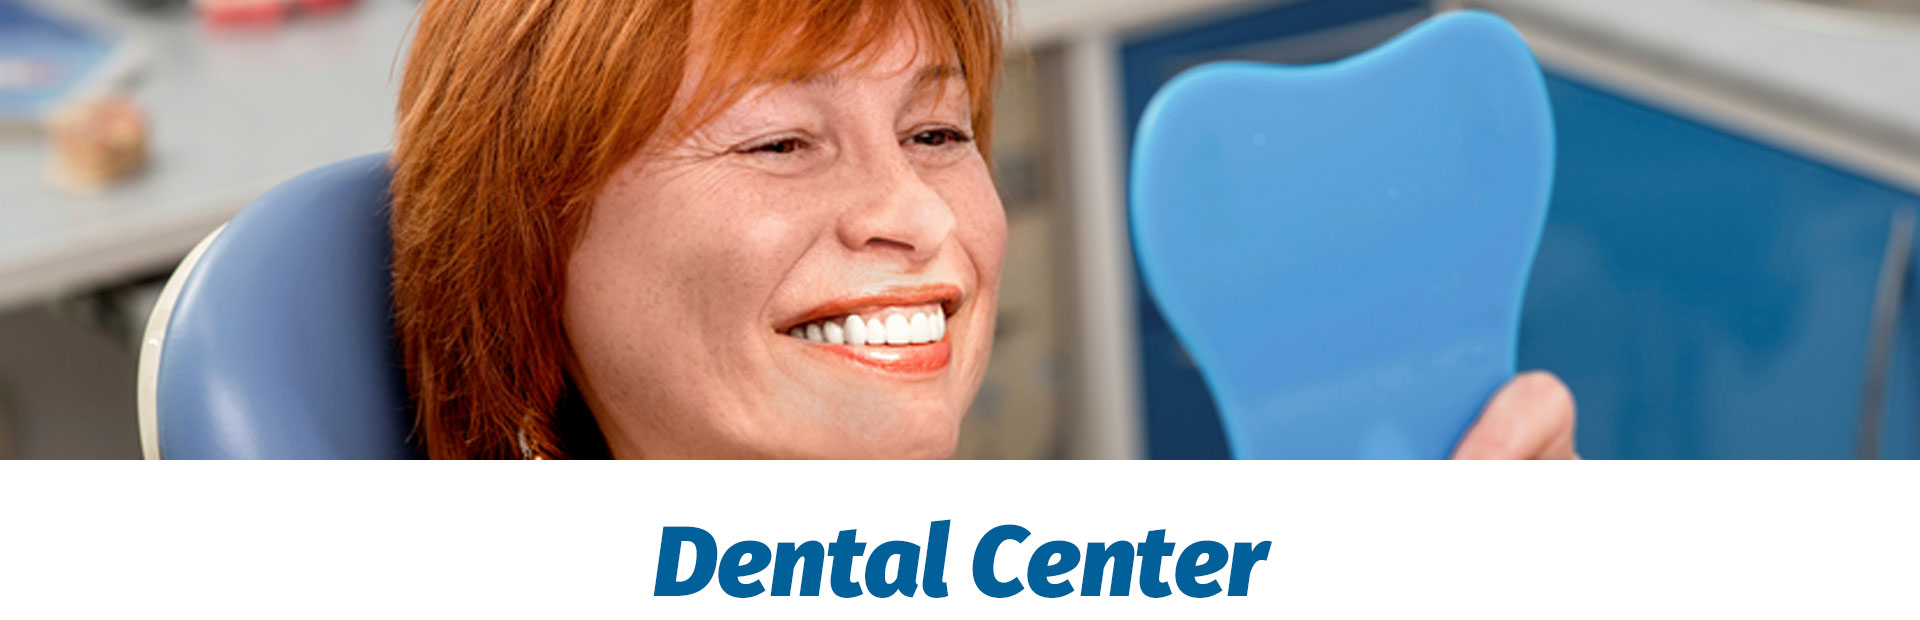 kleinlife dental center, dental care seniros, 55 plus community dental care